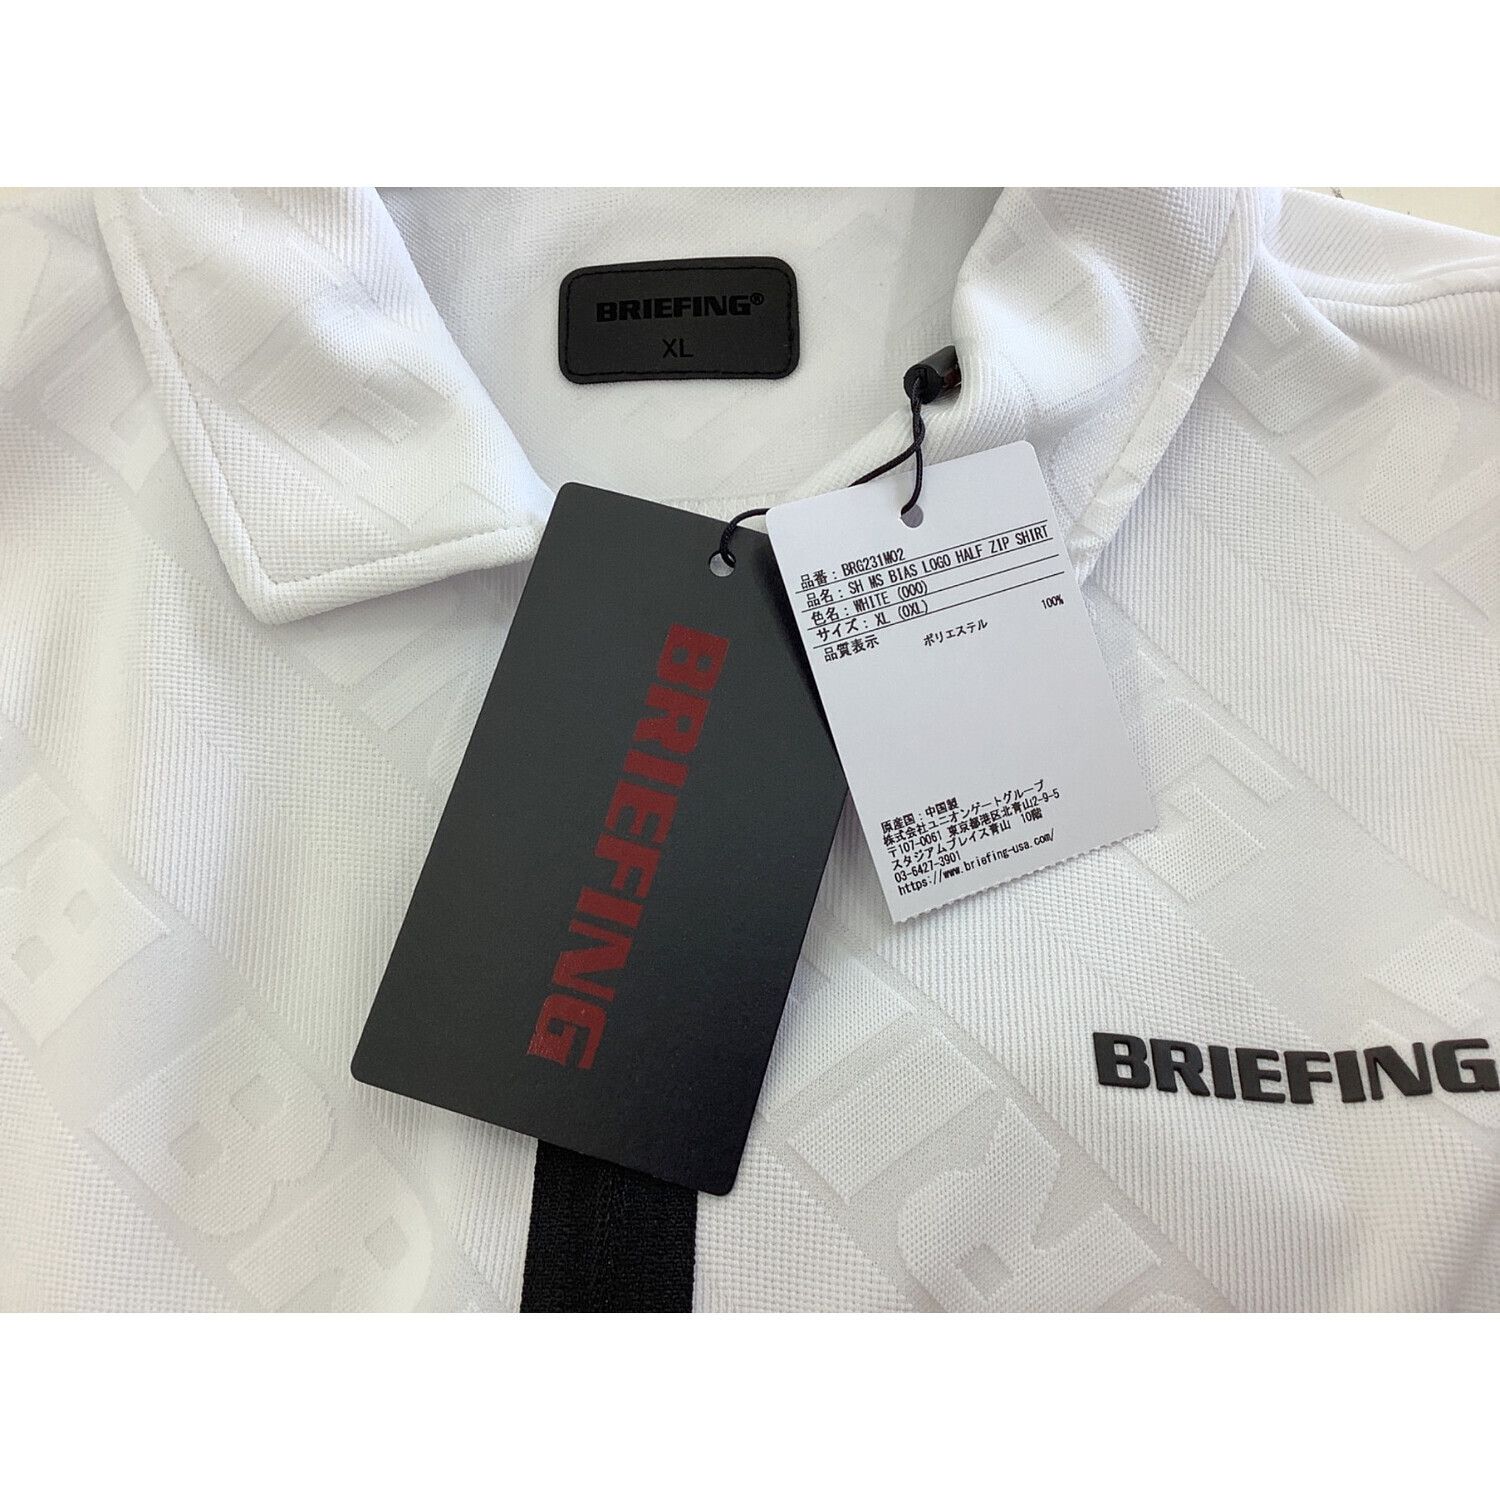 BRIEFING (ブリーフィング) ゴルフウェア(トップス) メンズ SIZE XL